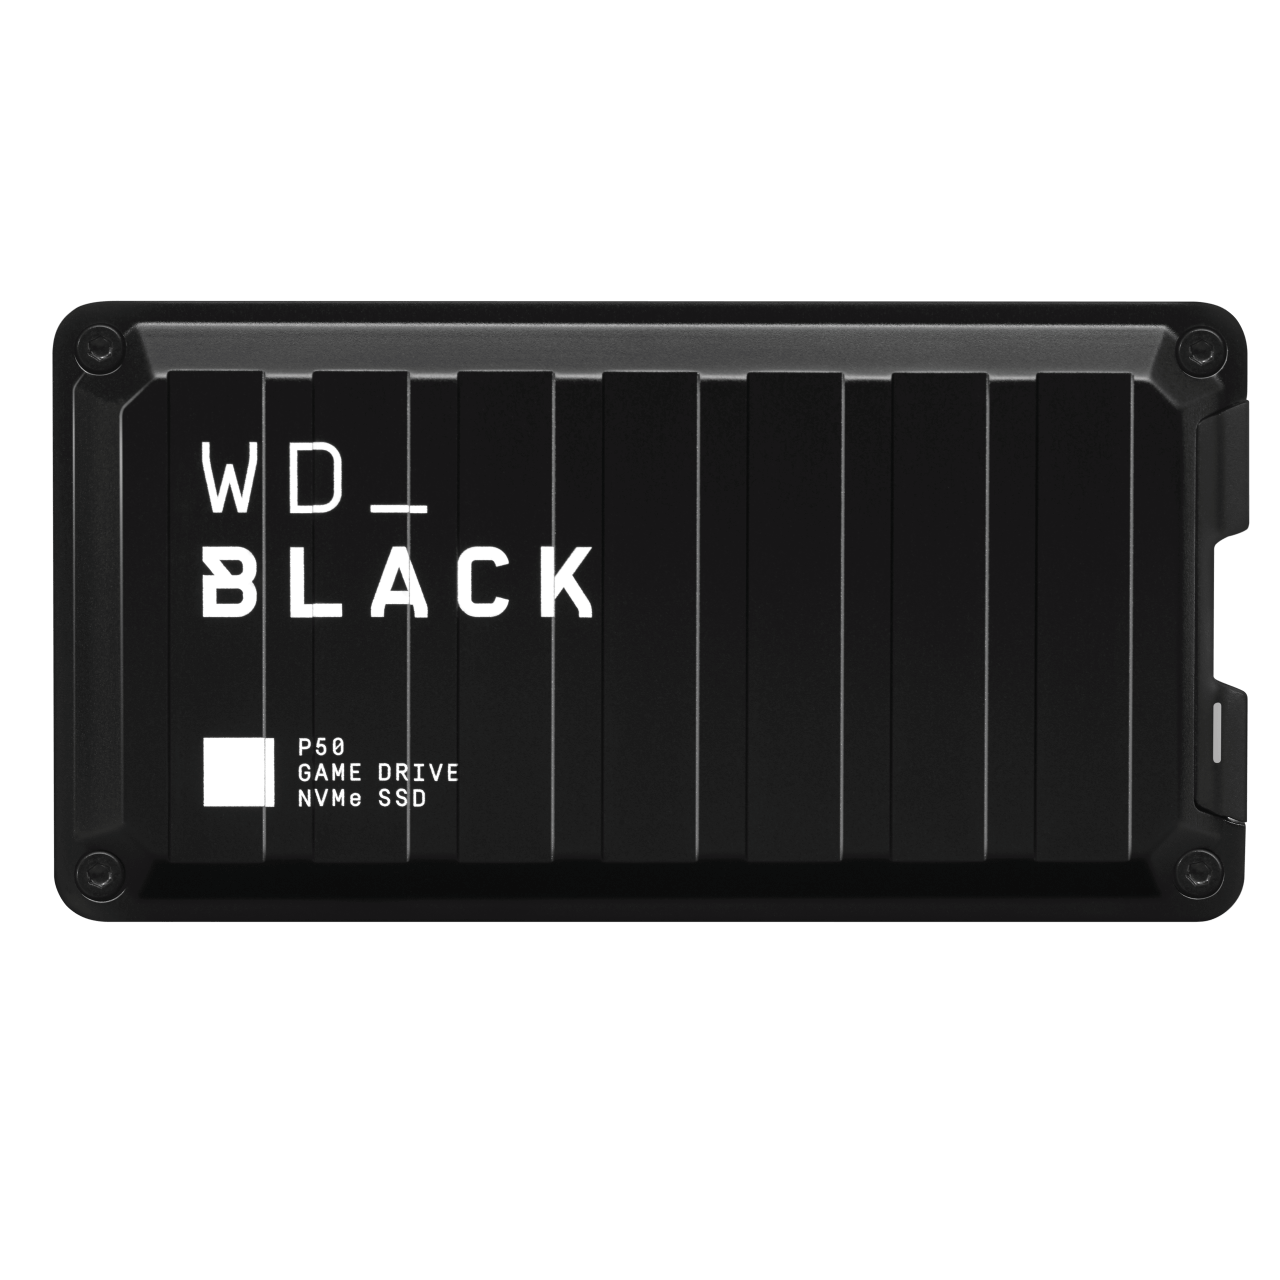 Wd Black P50 Game Drive Ssd Western Digital Store